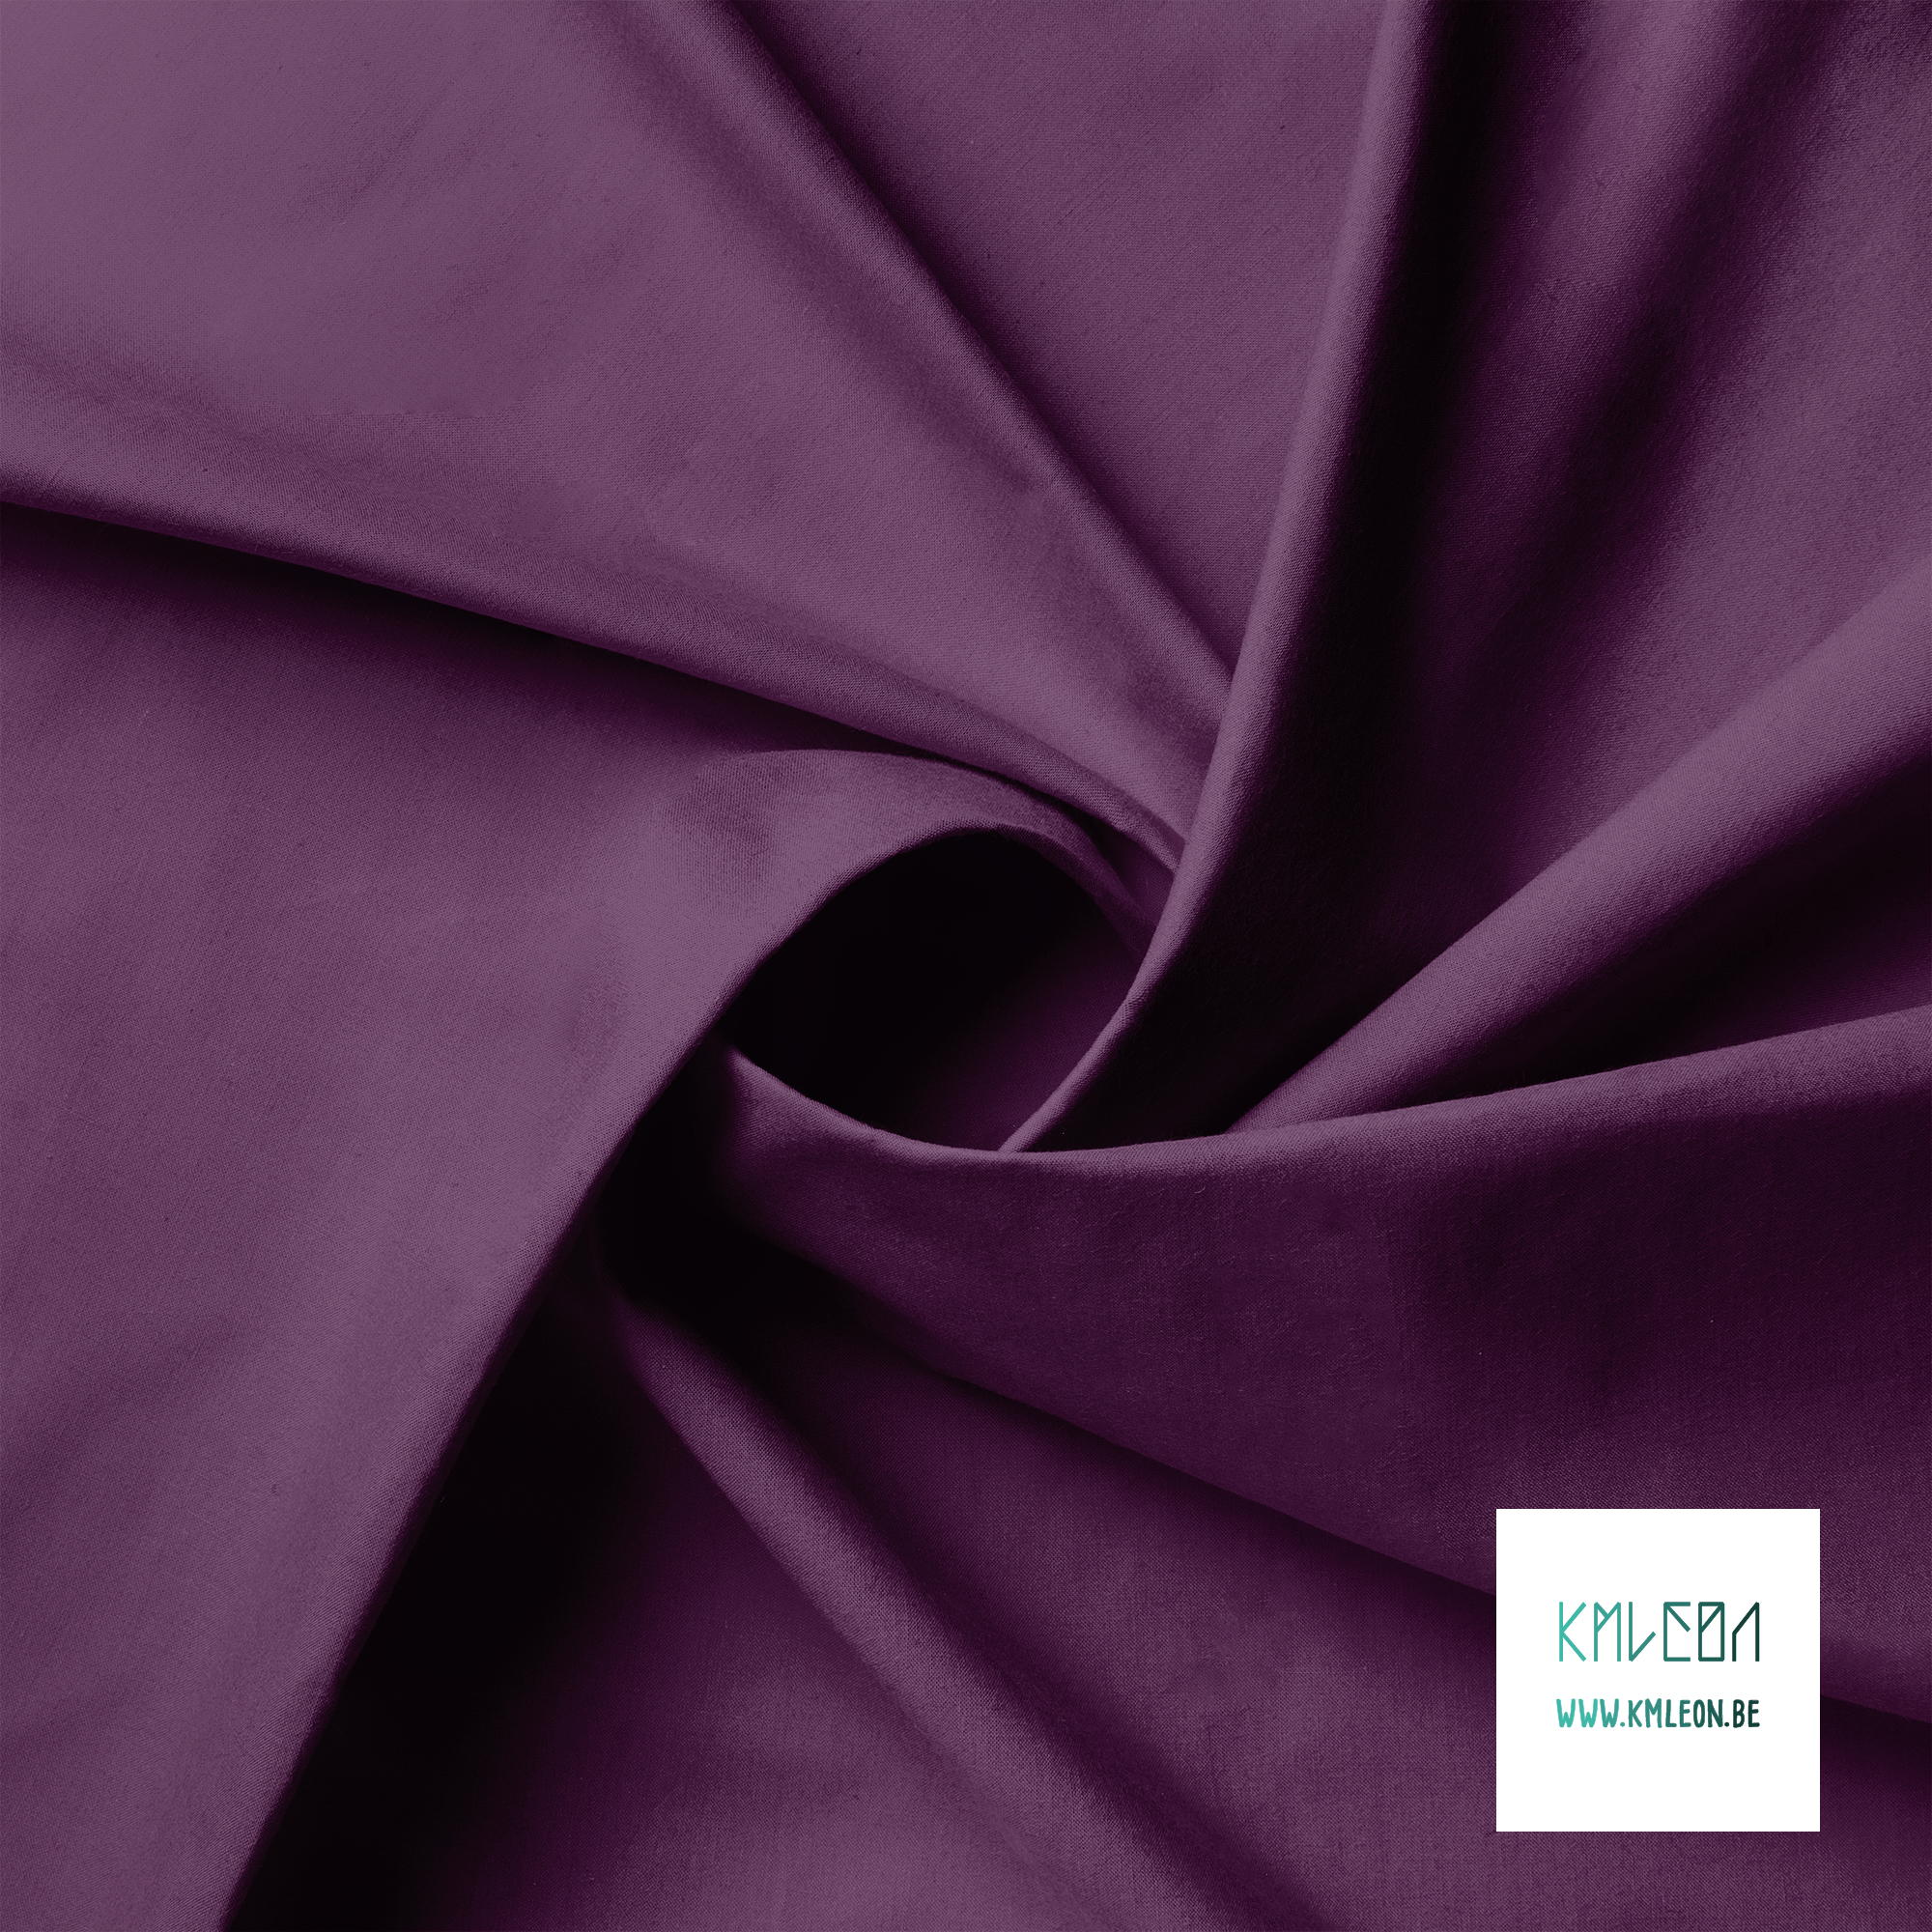 Solid plum purple fabric